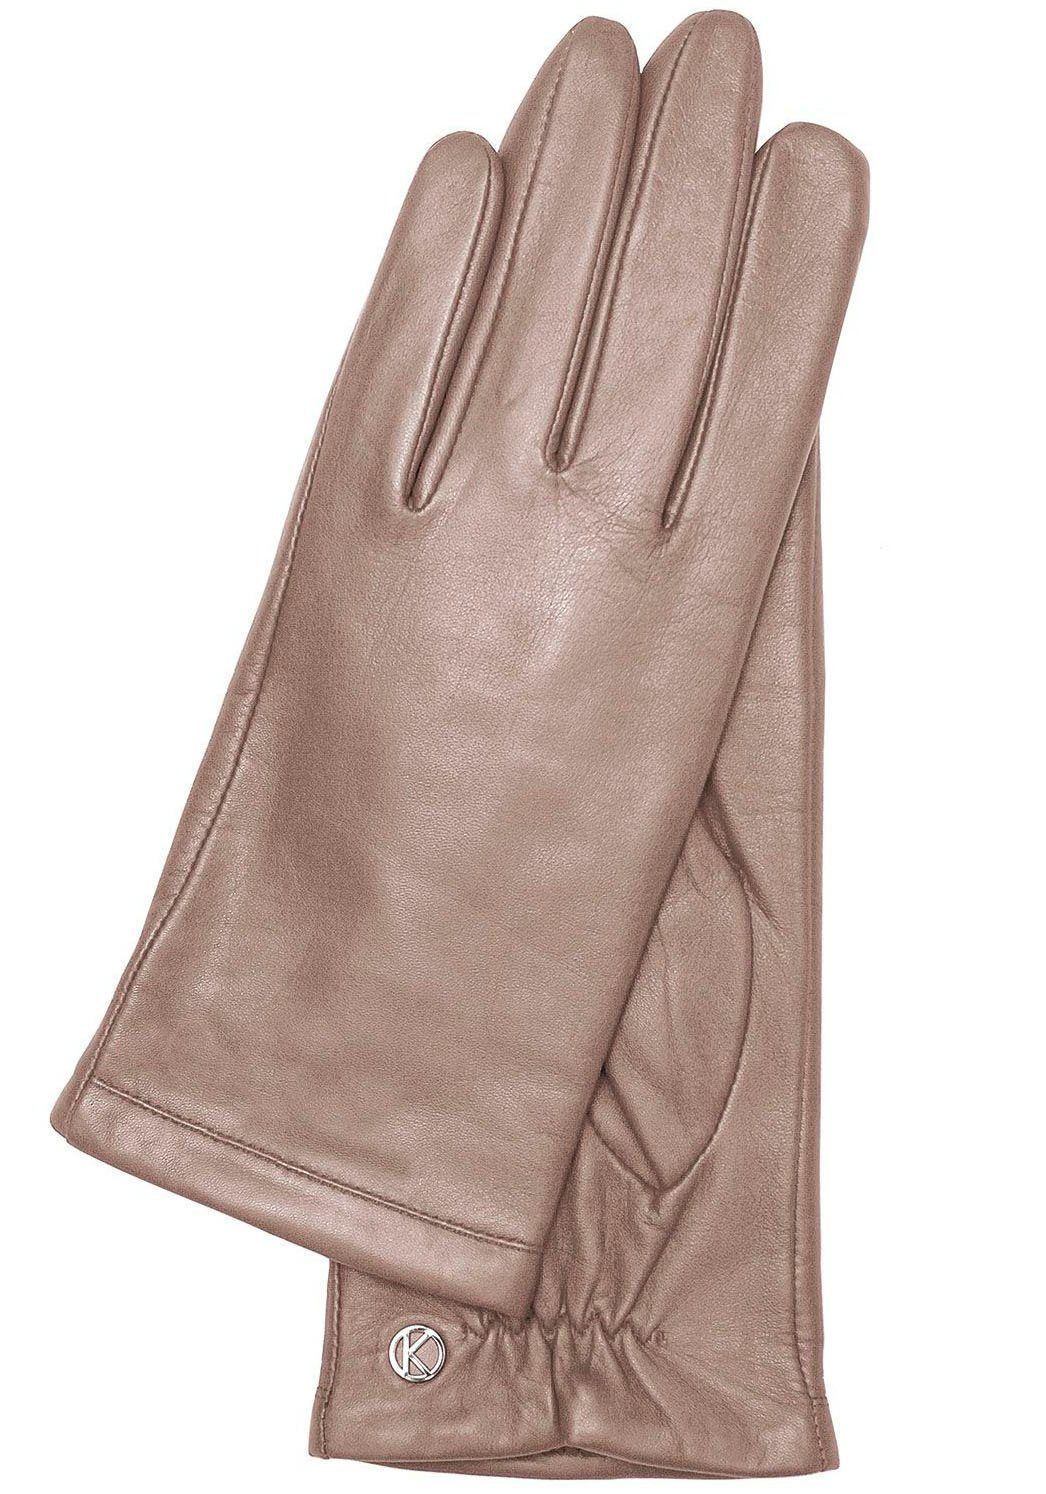 Passform, Zierbiesen Chelsea KESSLER Lederhandschuhe Touchfunktion, mink schlanke